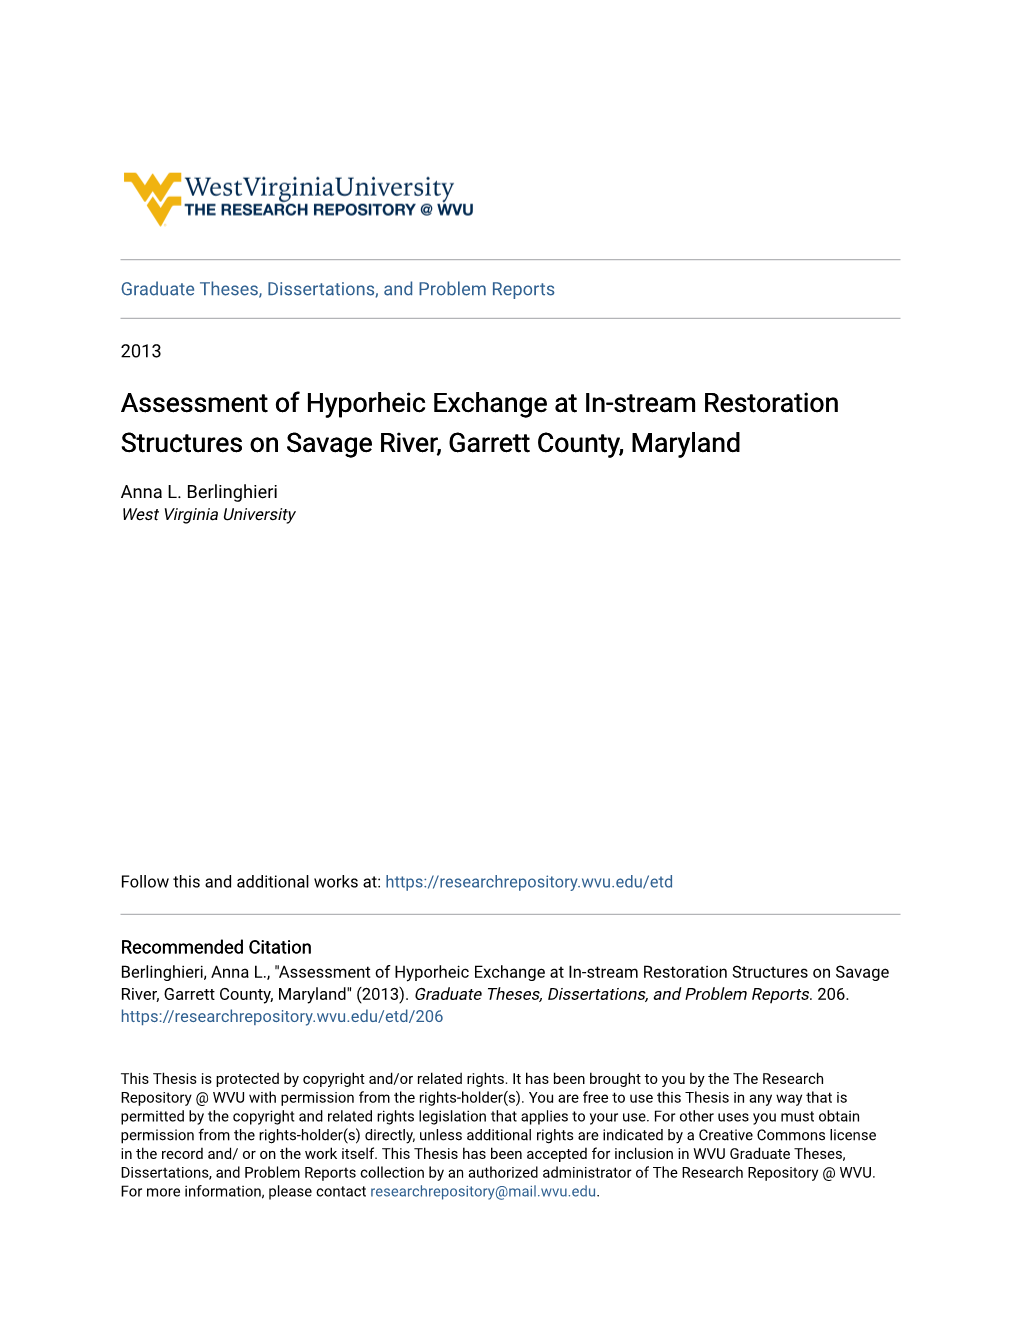 Assessment of Hyporheic Exchange at In-Stream Restoration Structures on Savage River, Garrett County, Maryland